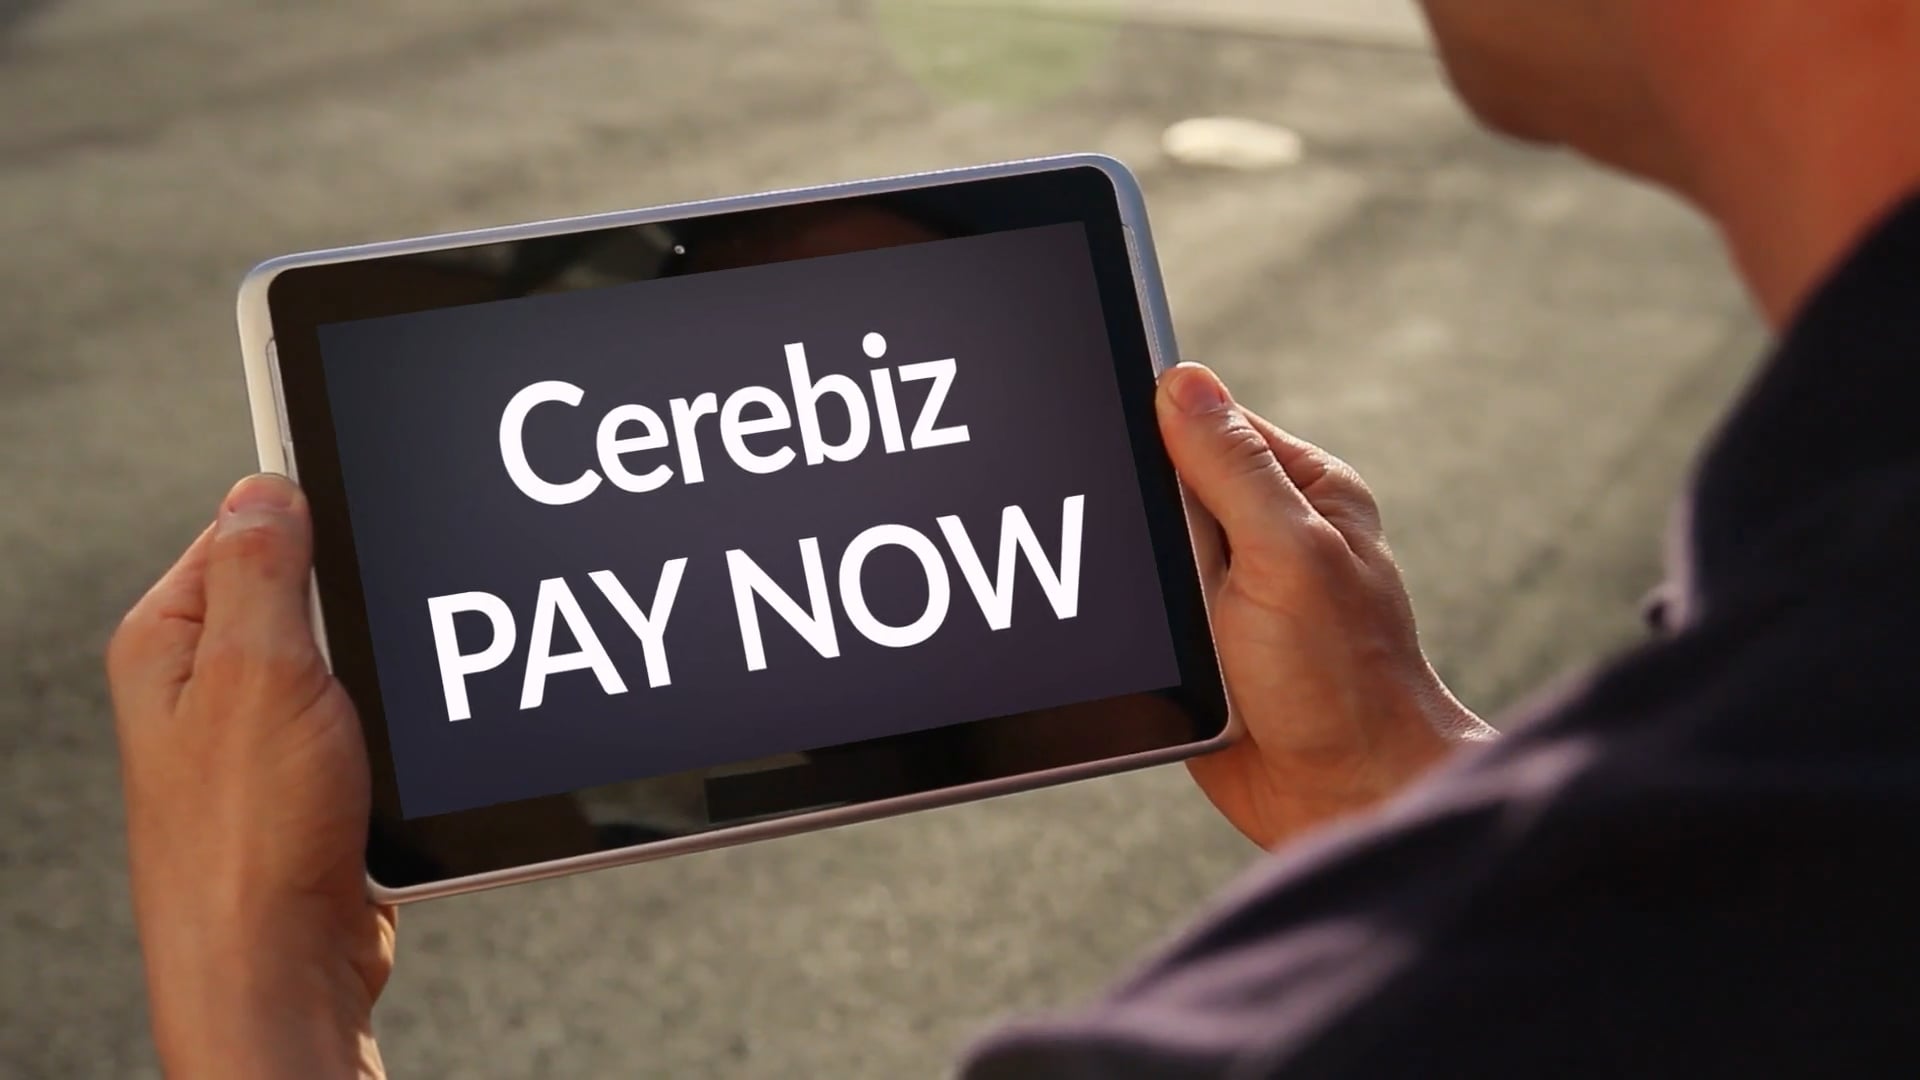 Cerebiz PAY NOW benefits